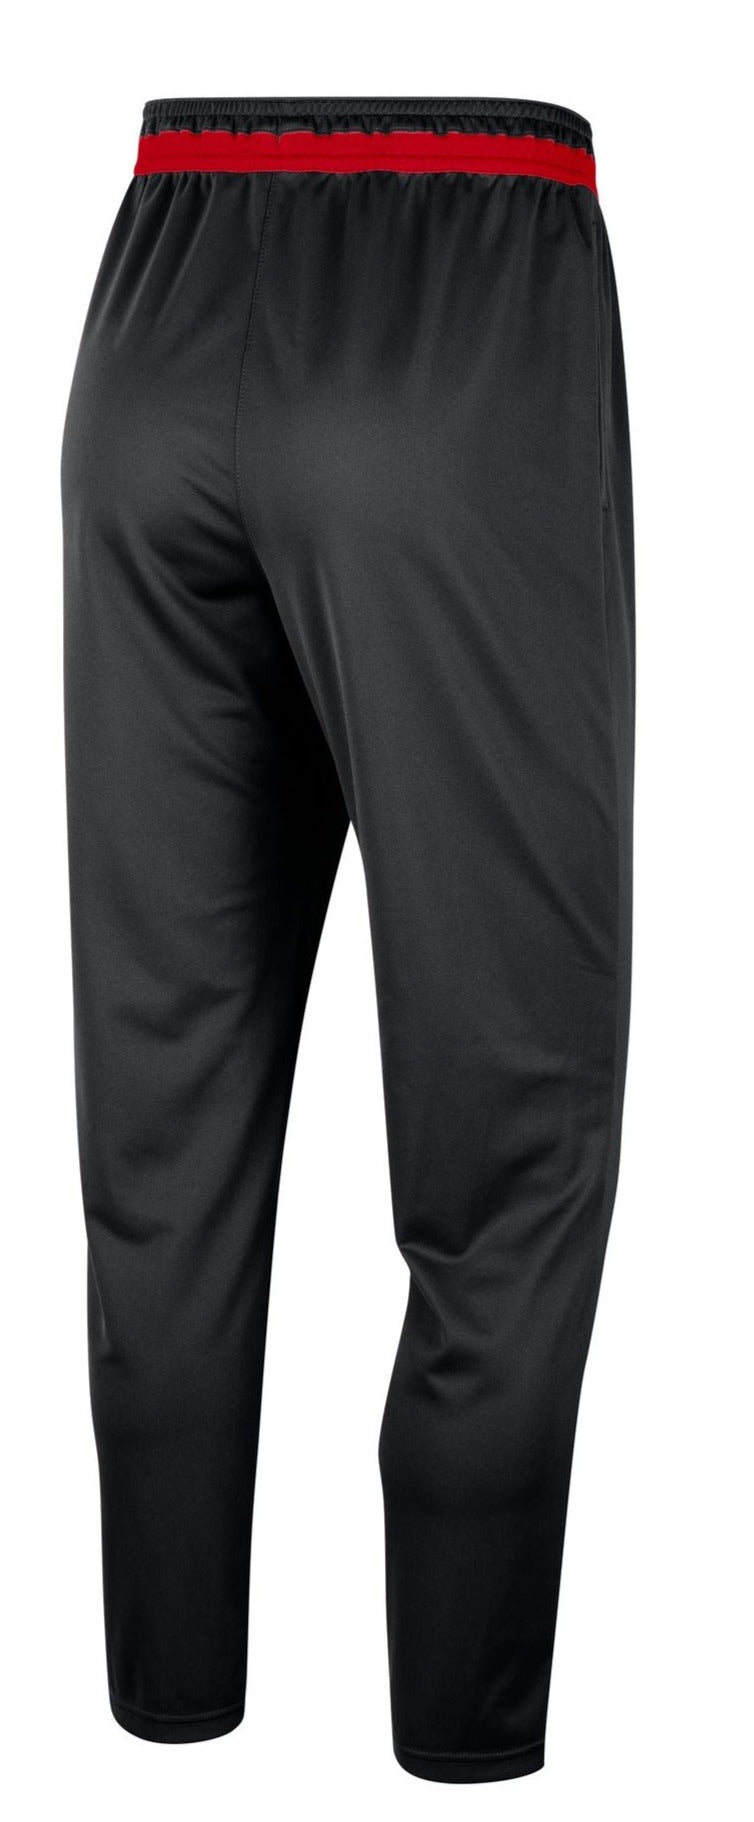 Nike Men's Dri-FIT Academy Soccer Pants, DA2800-010 Black/White, Medium -  Walmart.com